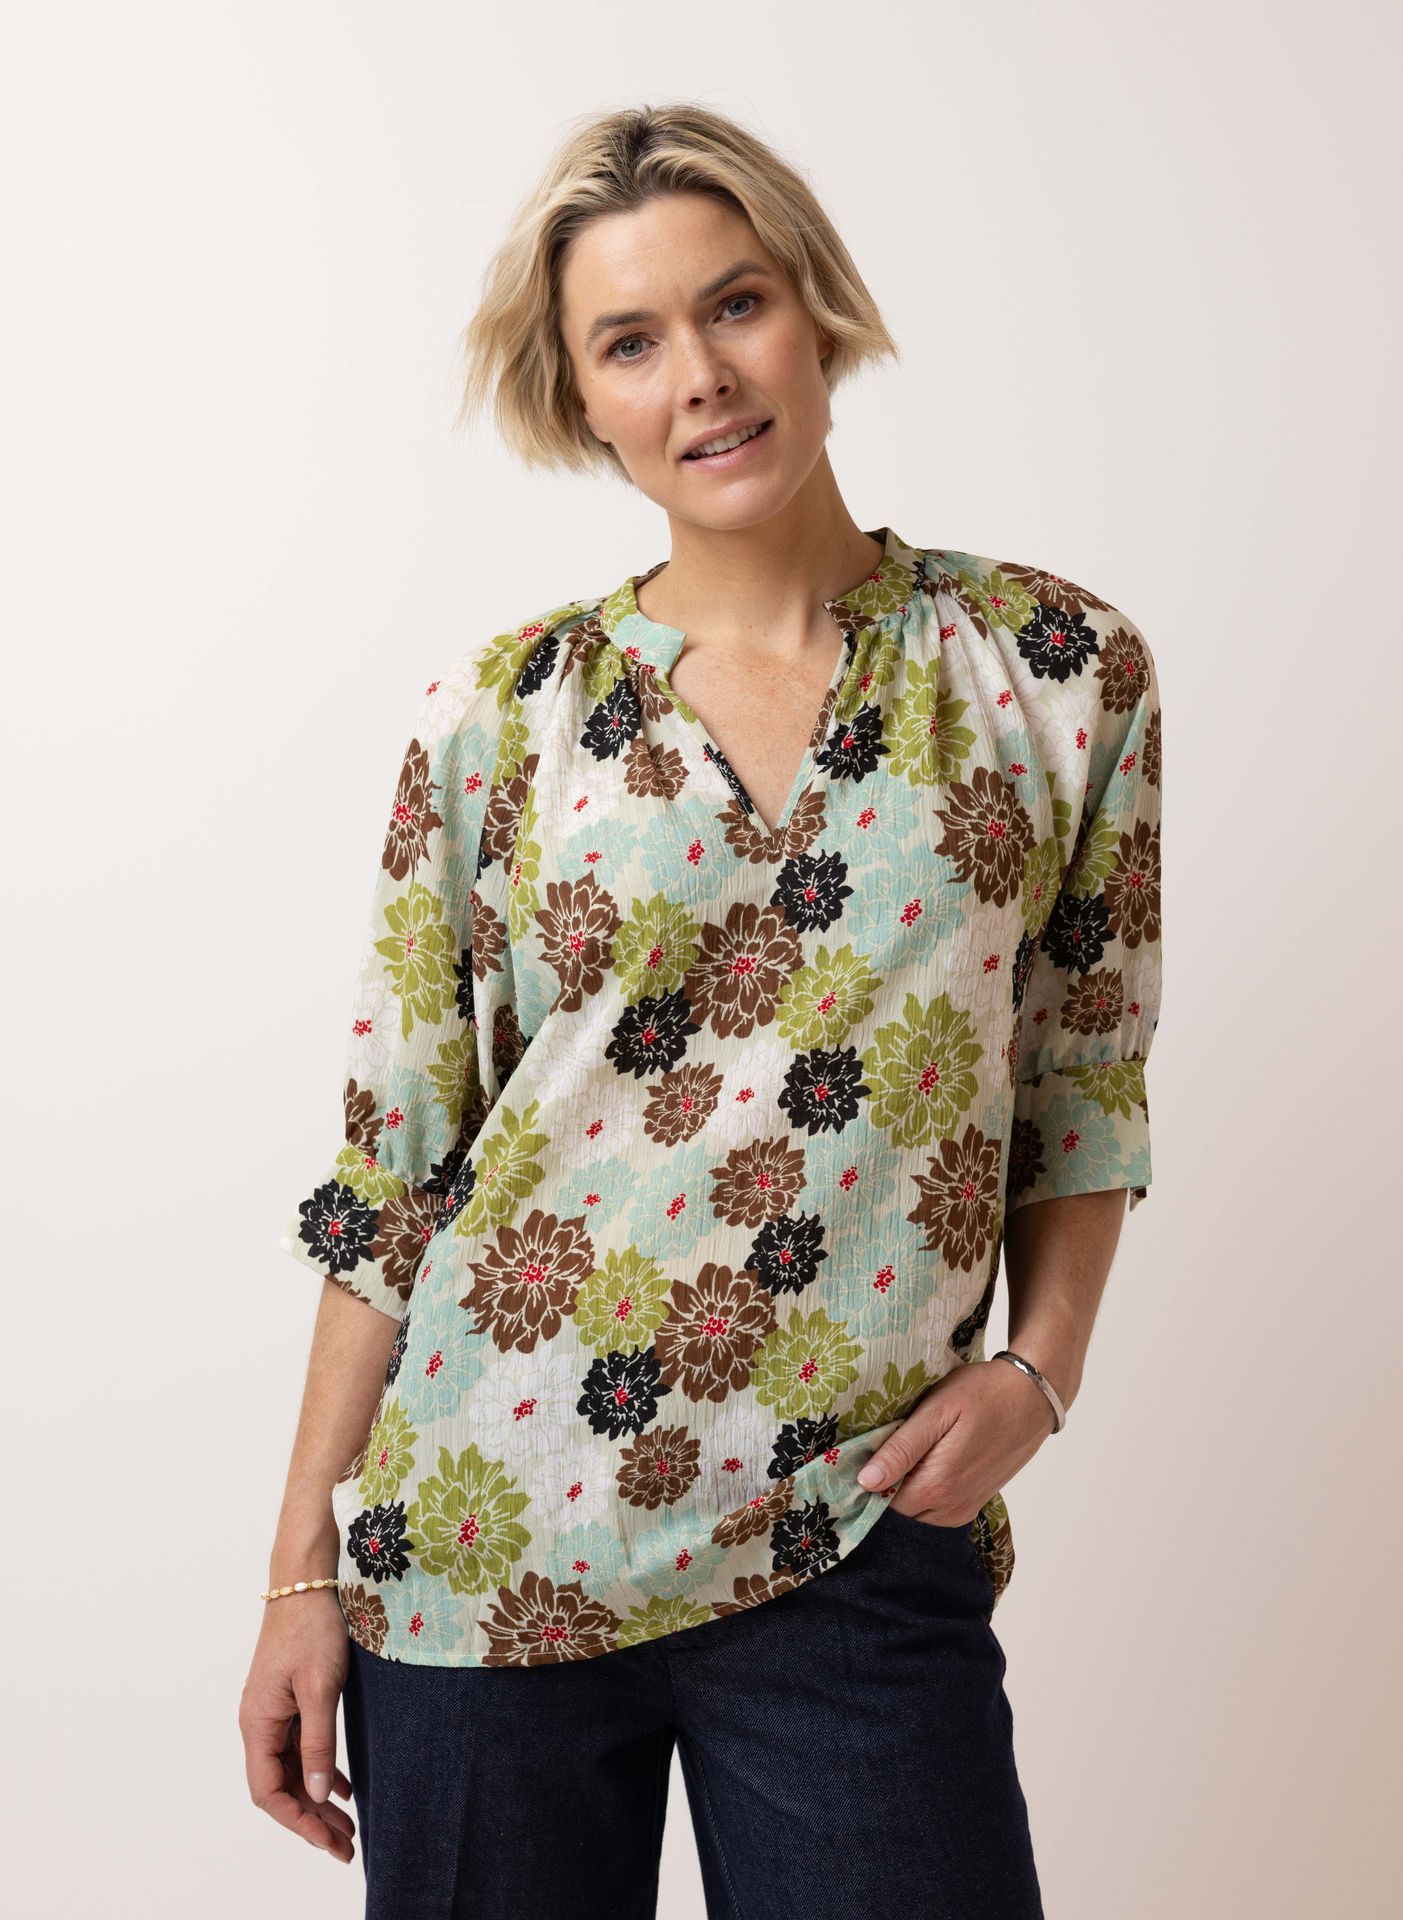  Meerkleurige blouse multicolor 214956-002-46